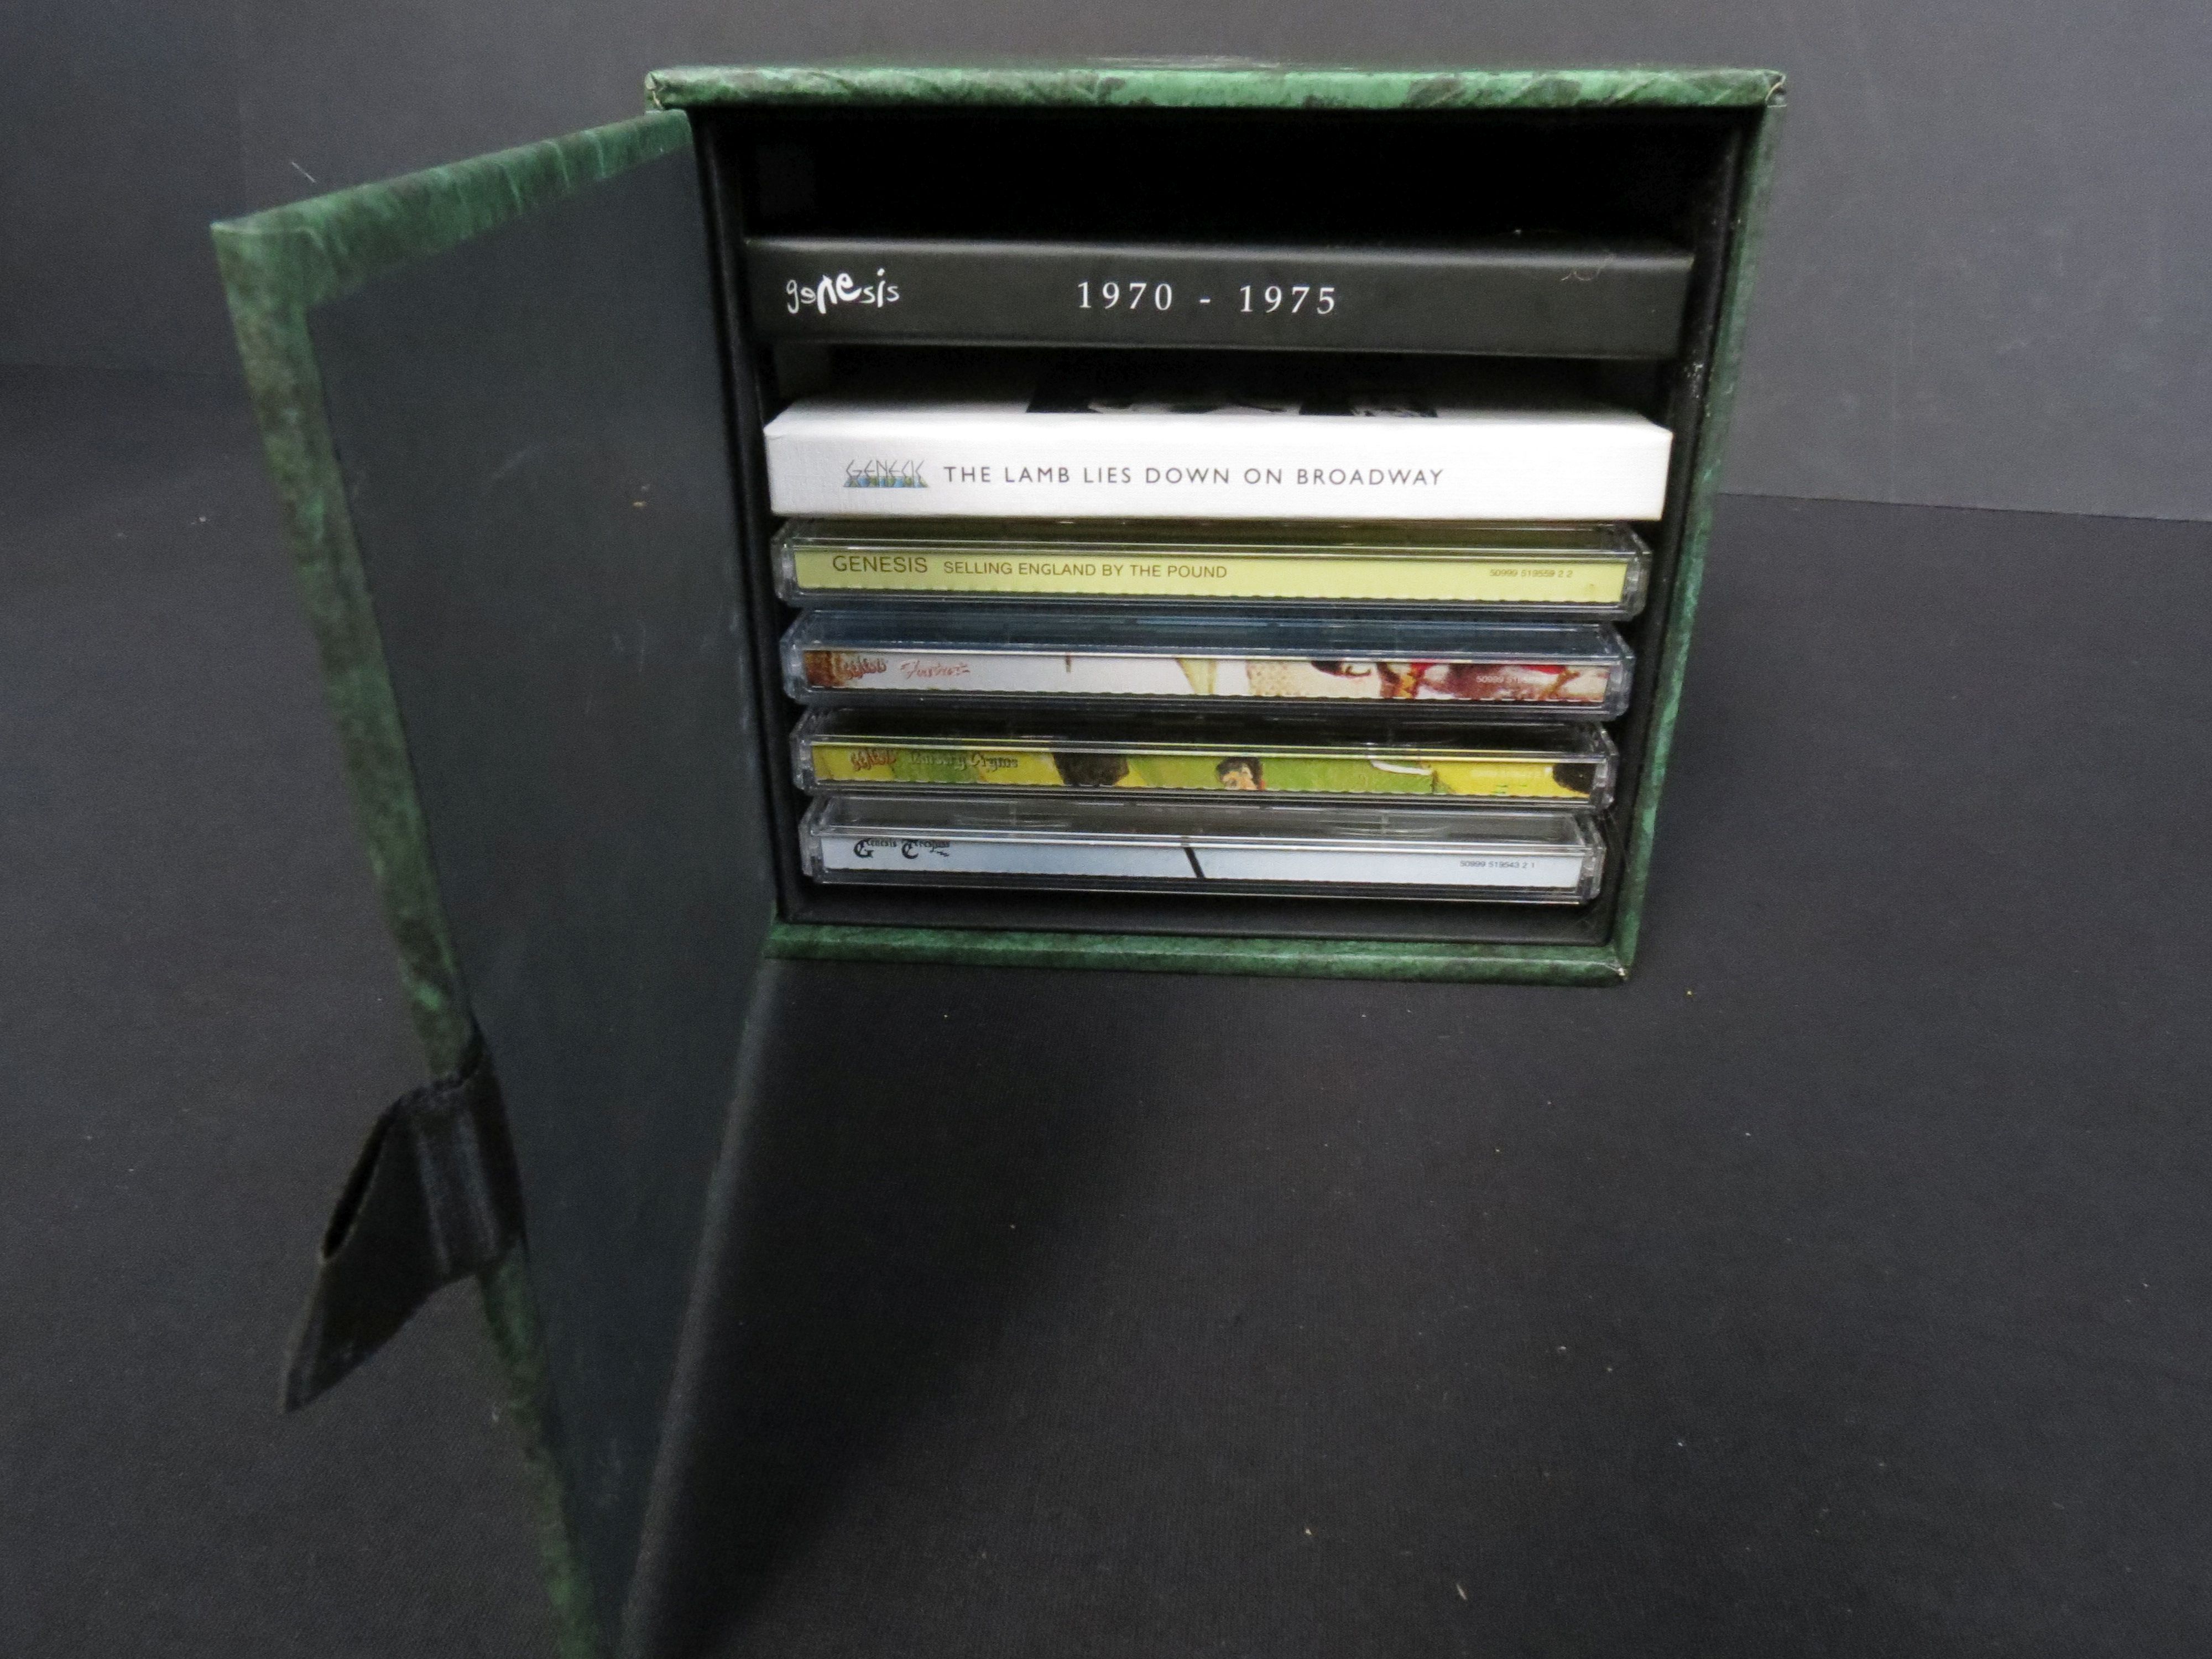 CDs - Genesis 1970-1975 CD / DVDBox Set - Image 2 of 4